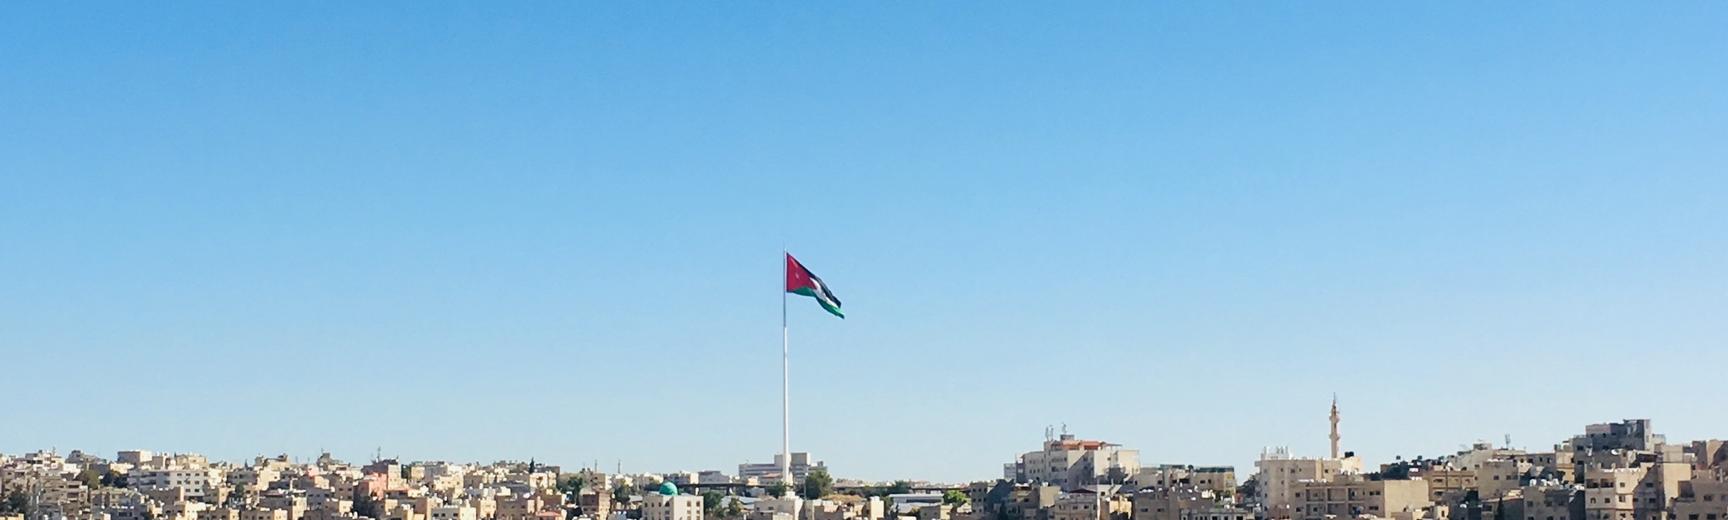 Image of Amman with Jordan flag flying high